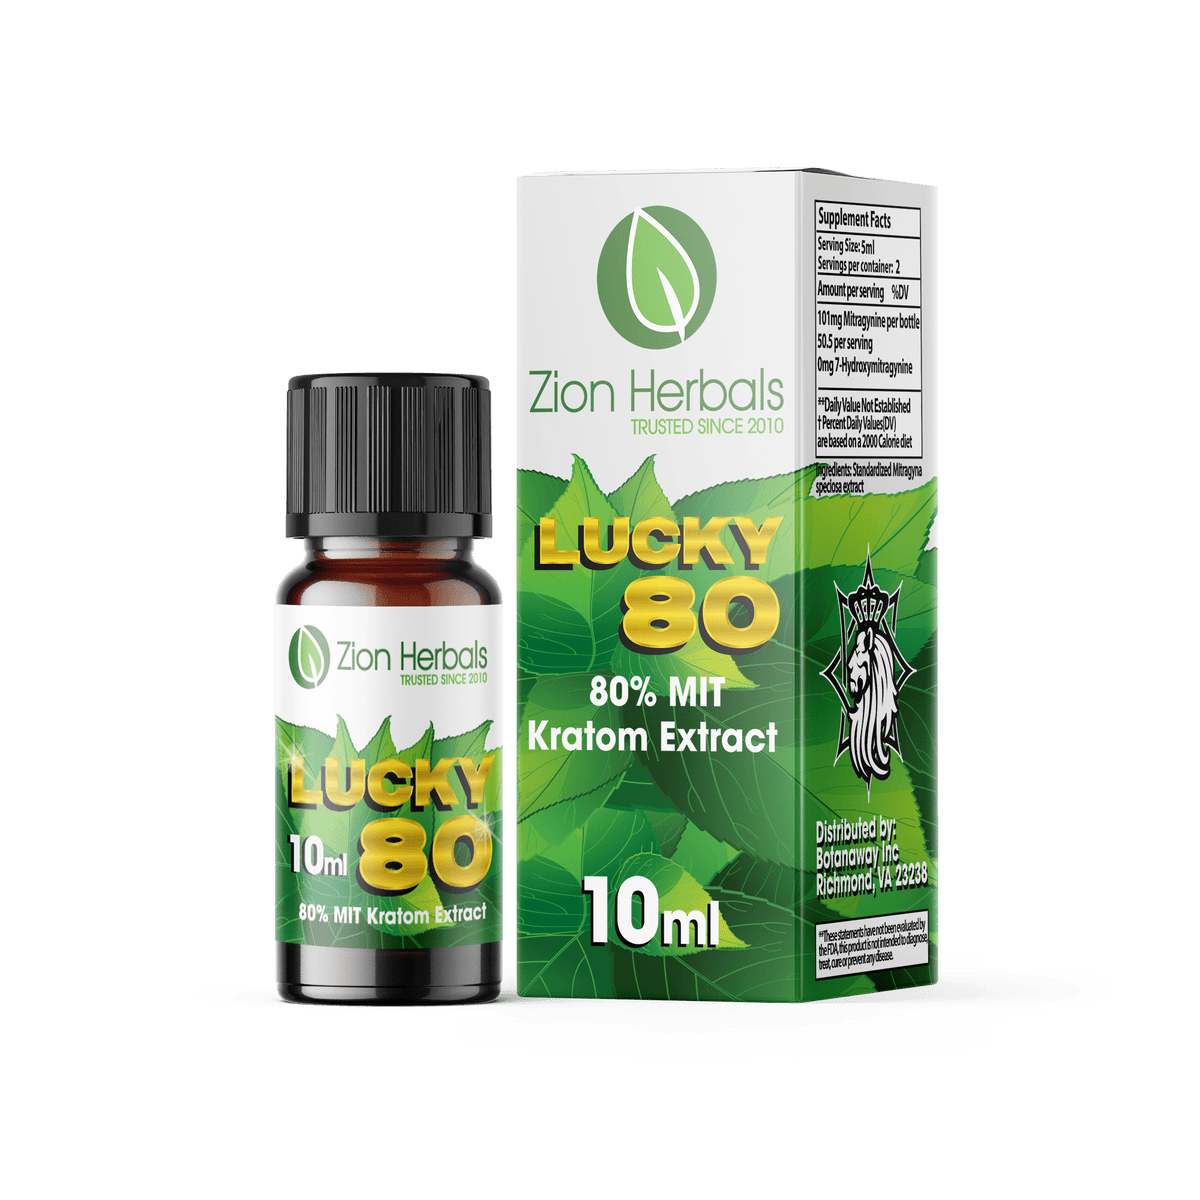 Zion Herbal LUCKY 80 15ml & 10ml Kratom Extract